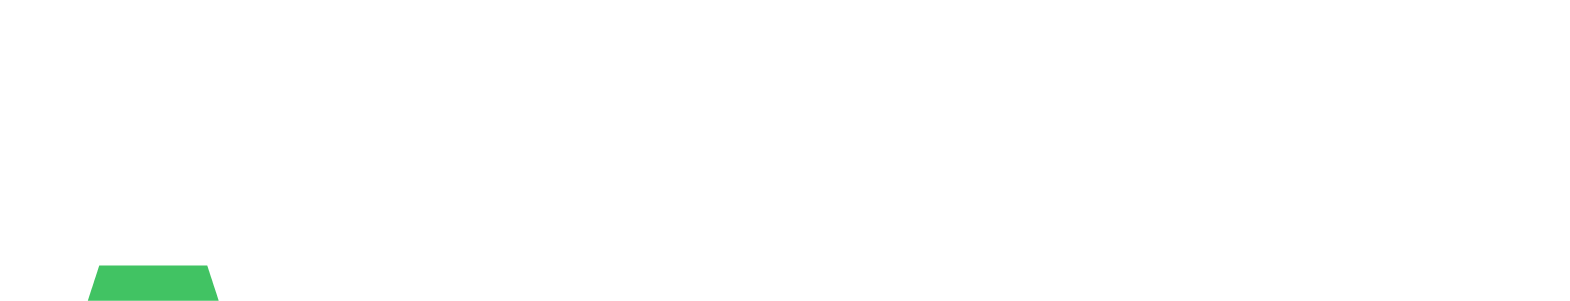 Avnet Logo groß für dunkle Hintergründe (transparentes PNG)